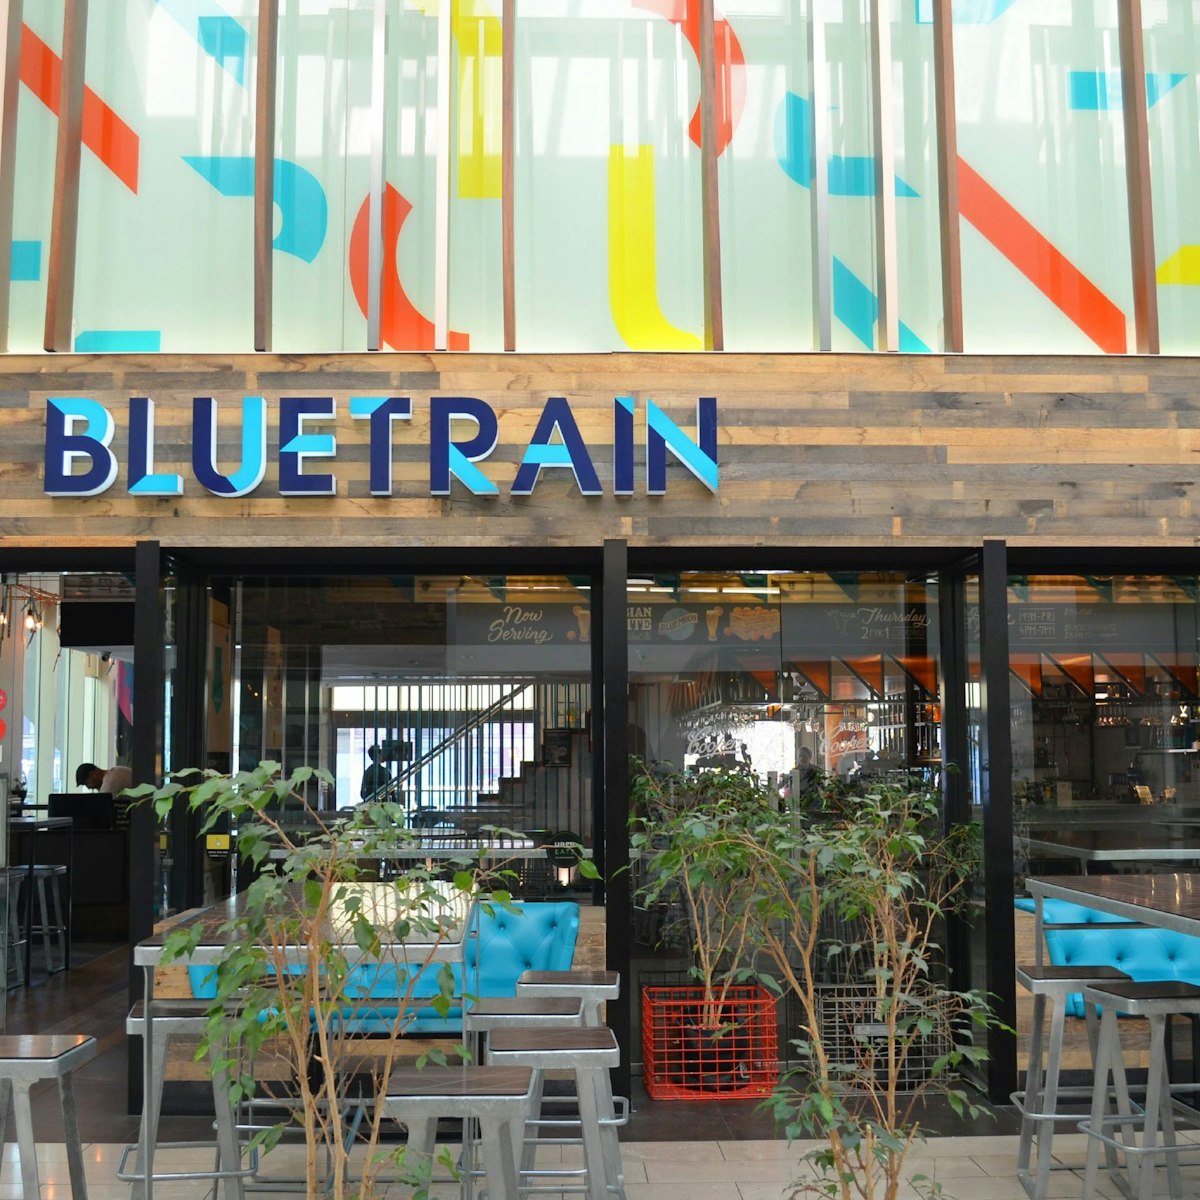 Exterior of the restaurant Blue Train.